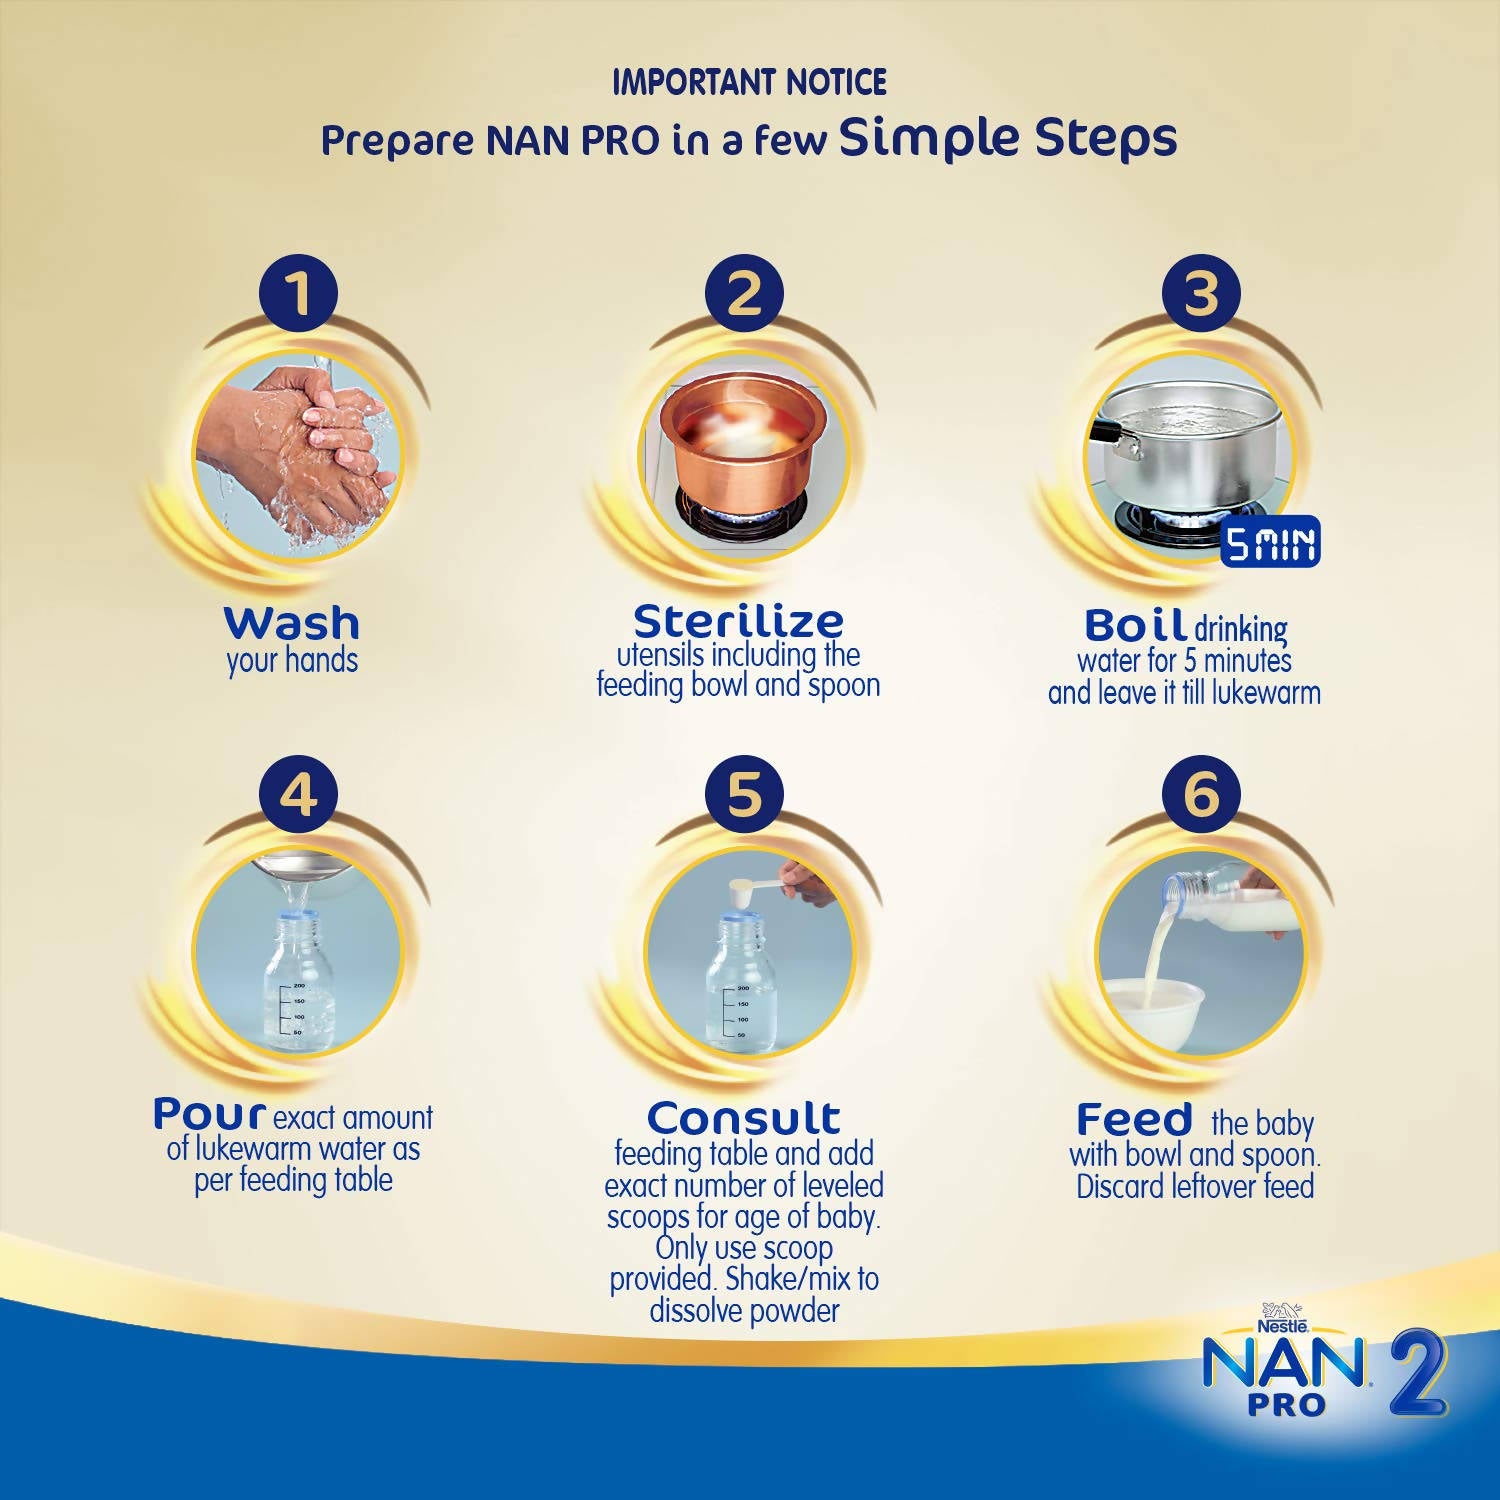 Nestle NANPro 1 Infant Formula, 2 ct.